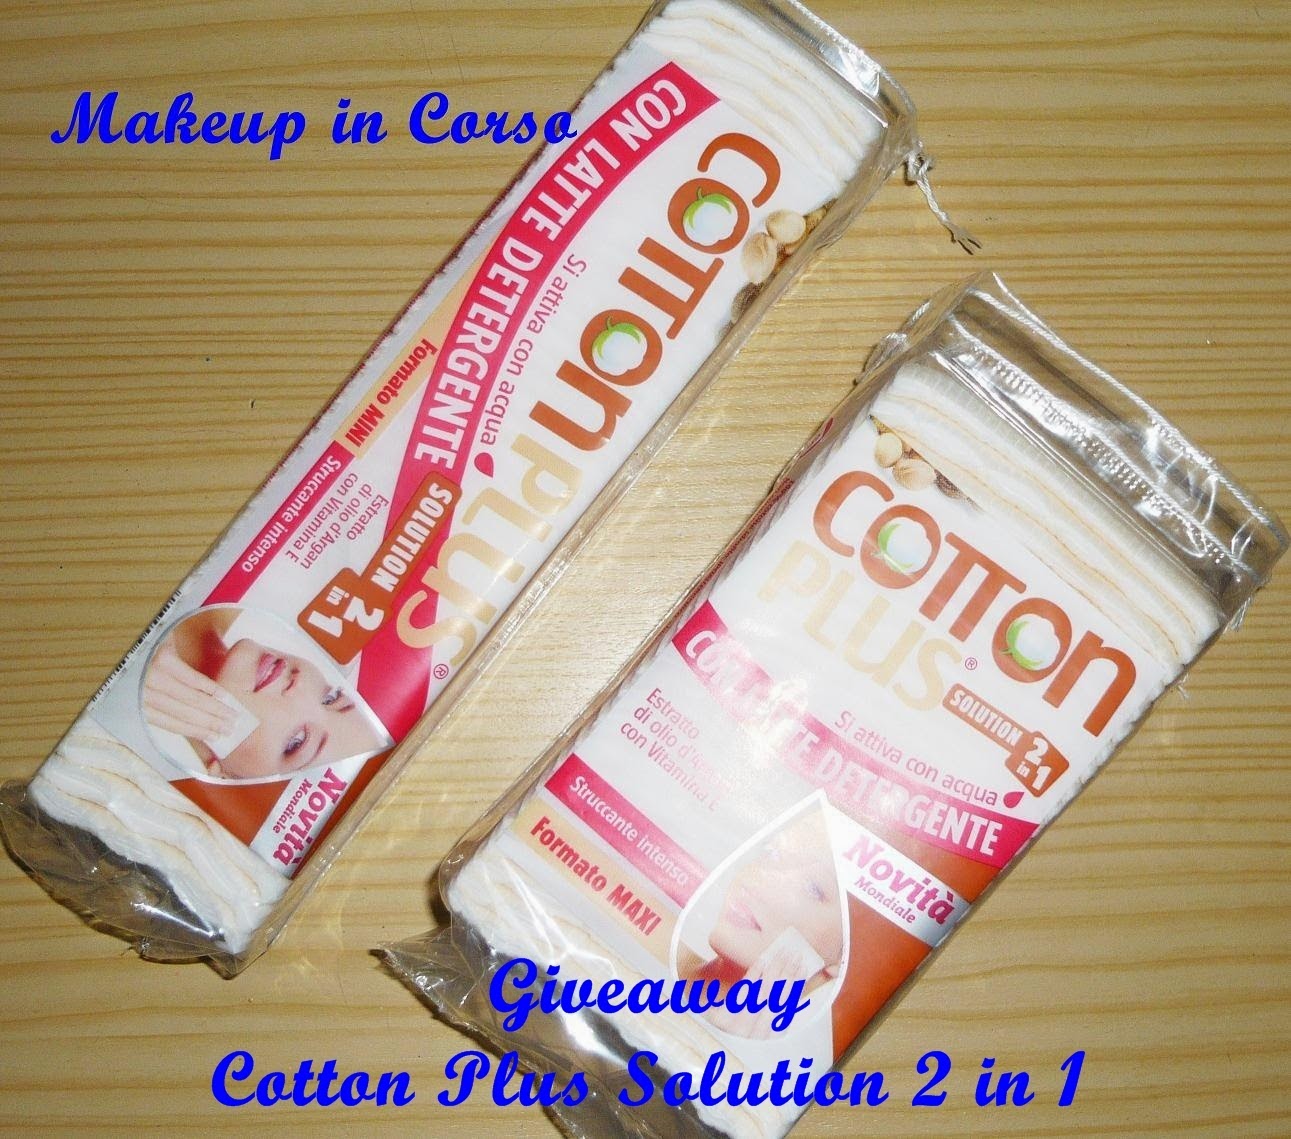 http://makeup-incorso.blogspot.it/2014/03/giveaway-cotton-plus-2-in-1.html?showComment=1395153150583#c8519725964561358997